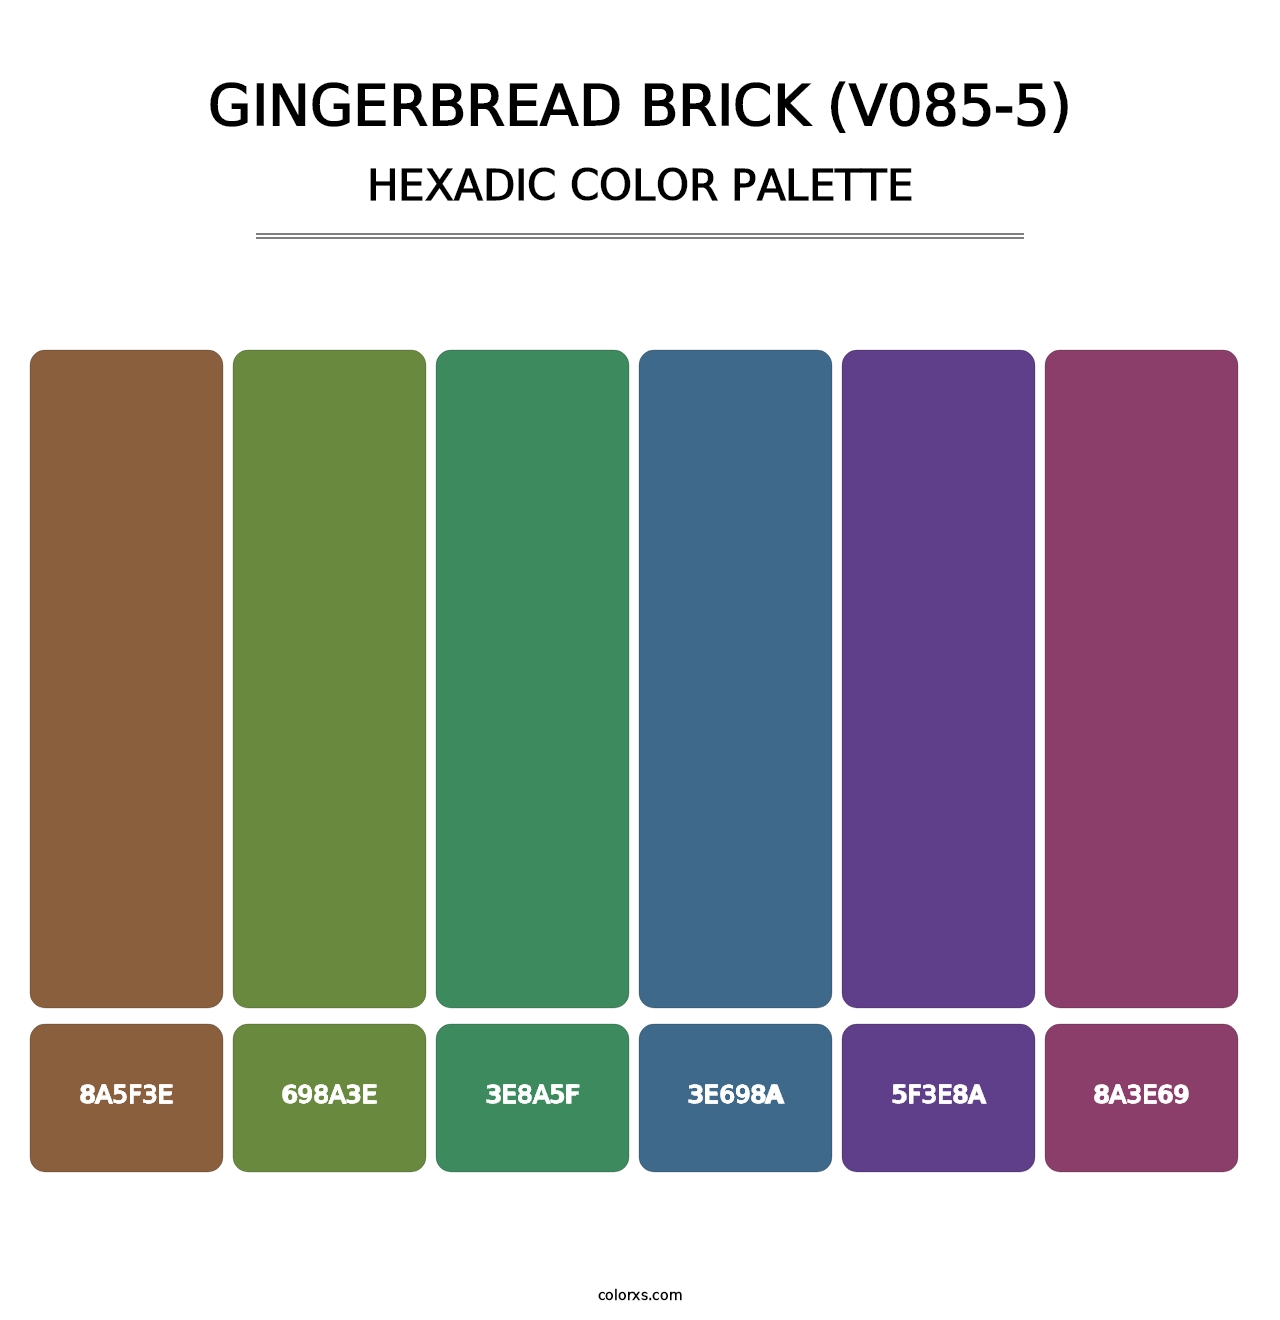 Gingerbread Brick (V085-5) - Hexadic Color Palette